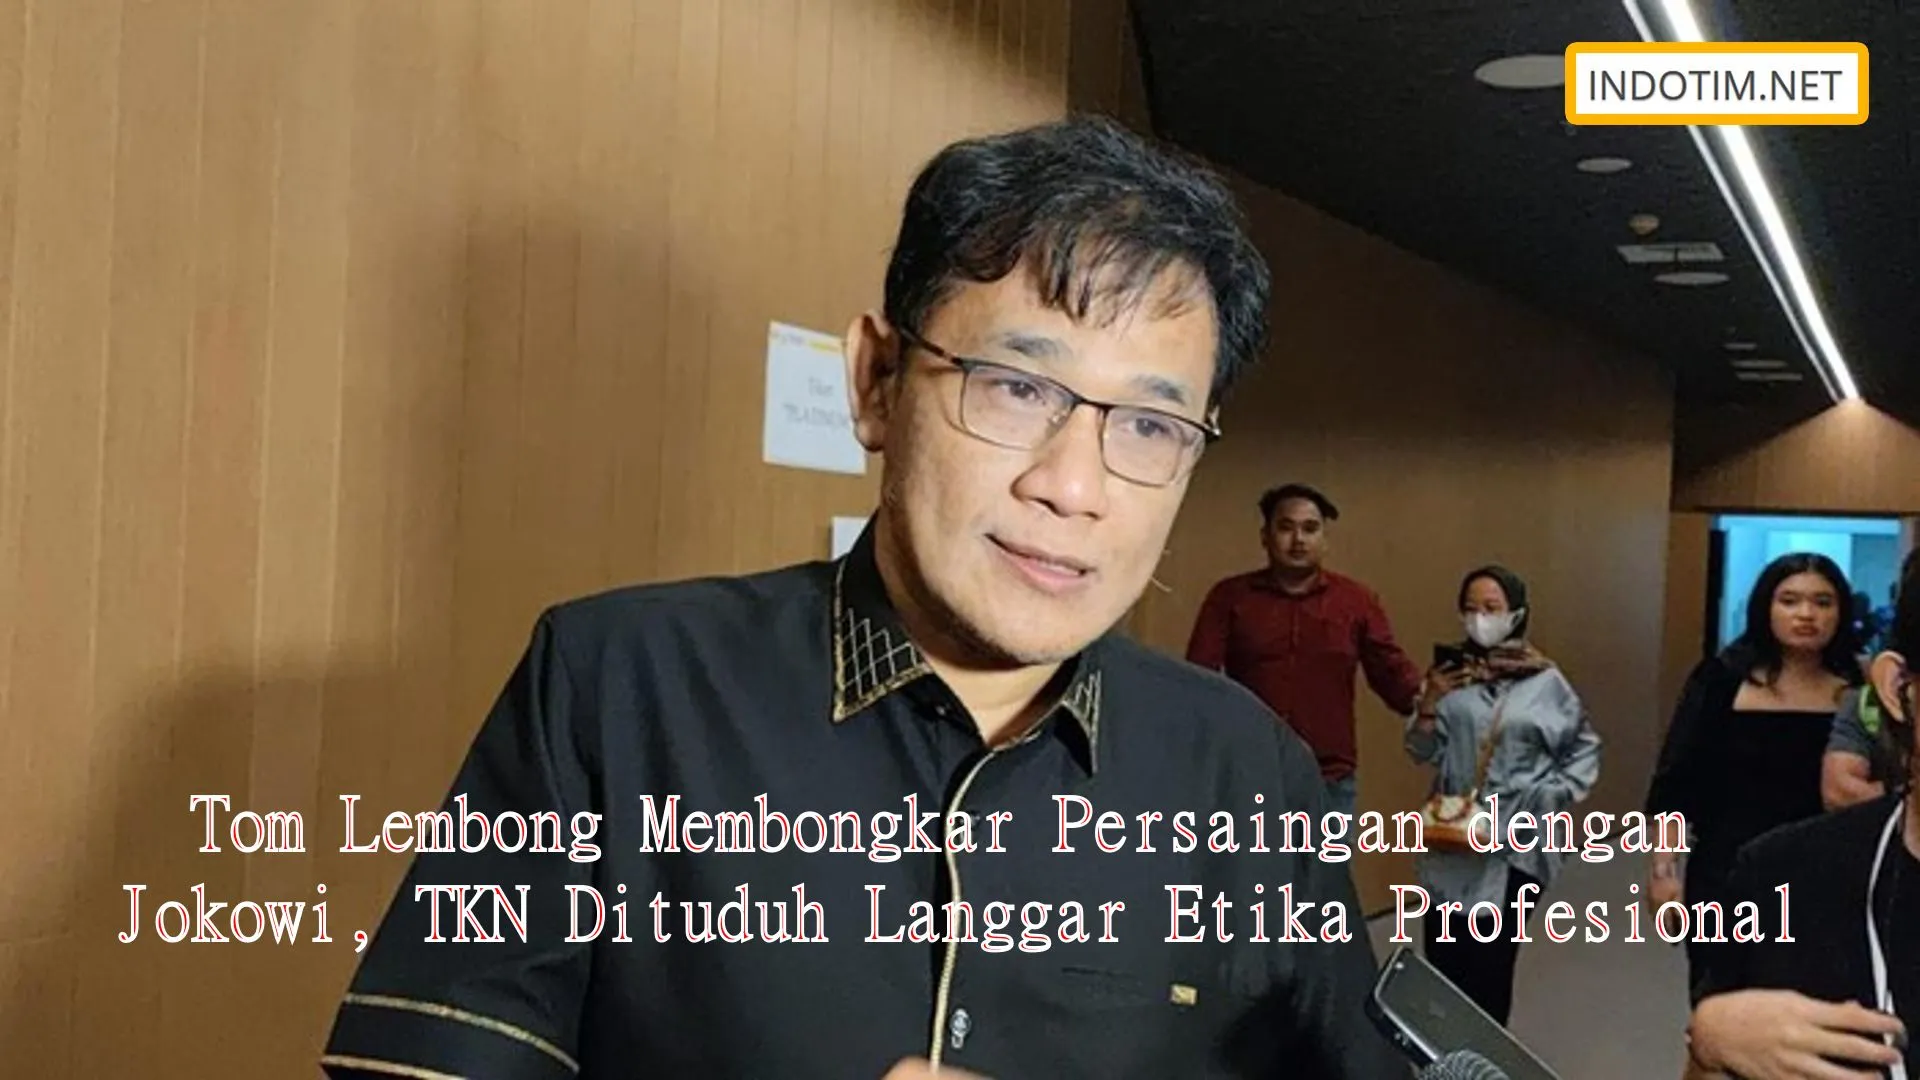 Tom Lembong Membongkar Persaingan dengan Jokowi, TKN Dituduh Langgar Etika Profesional